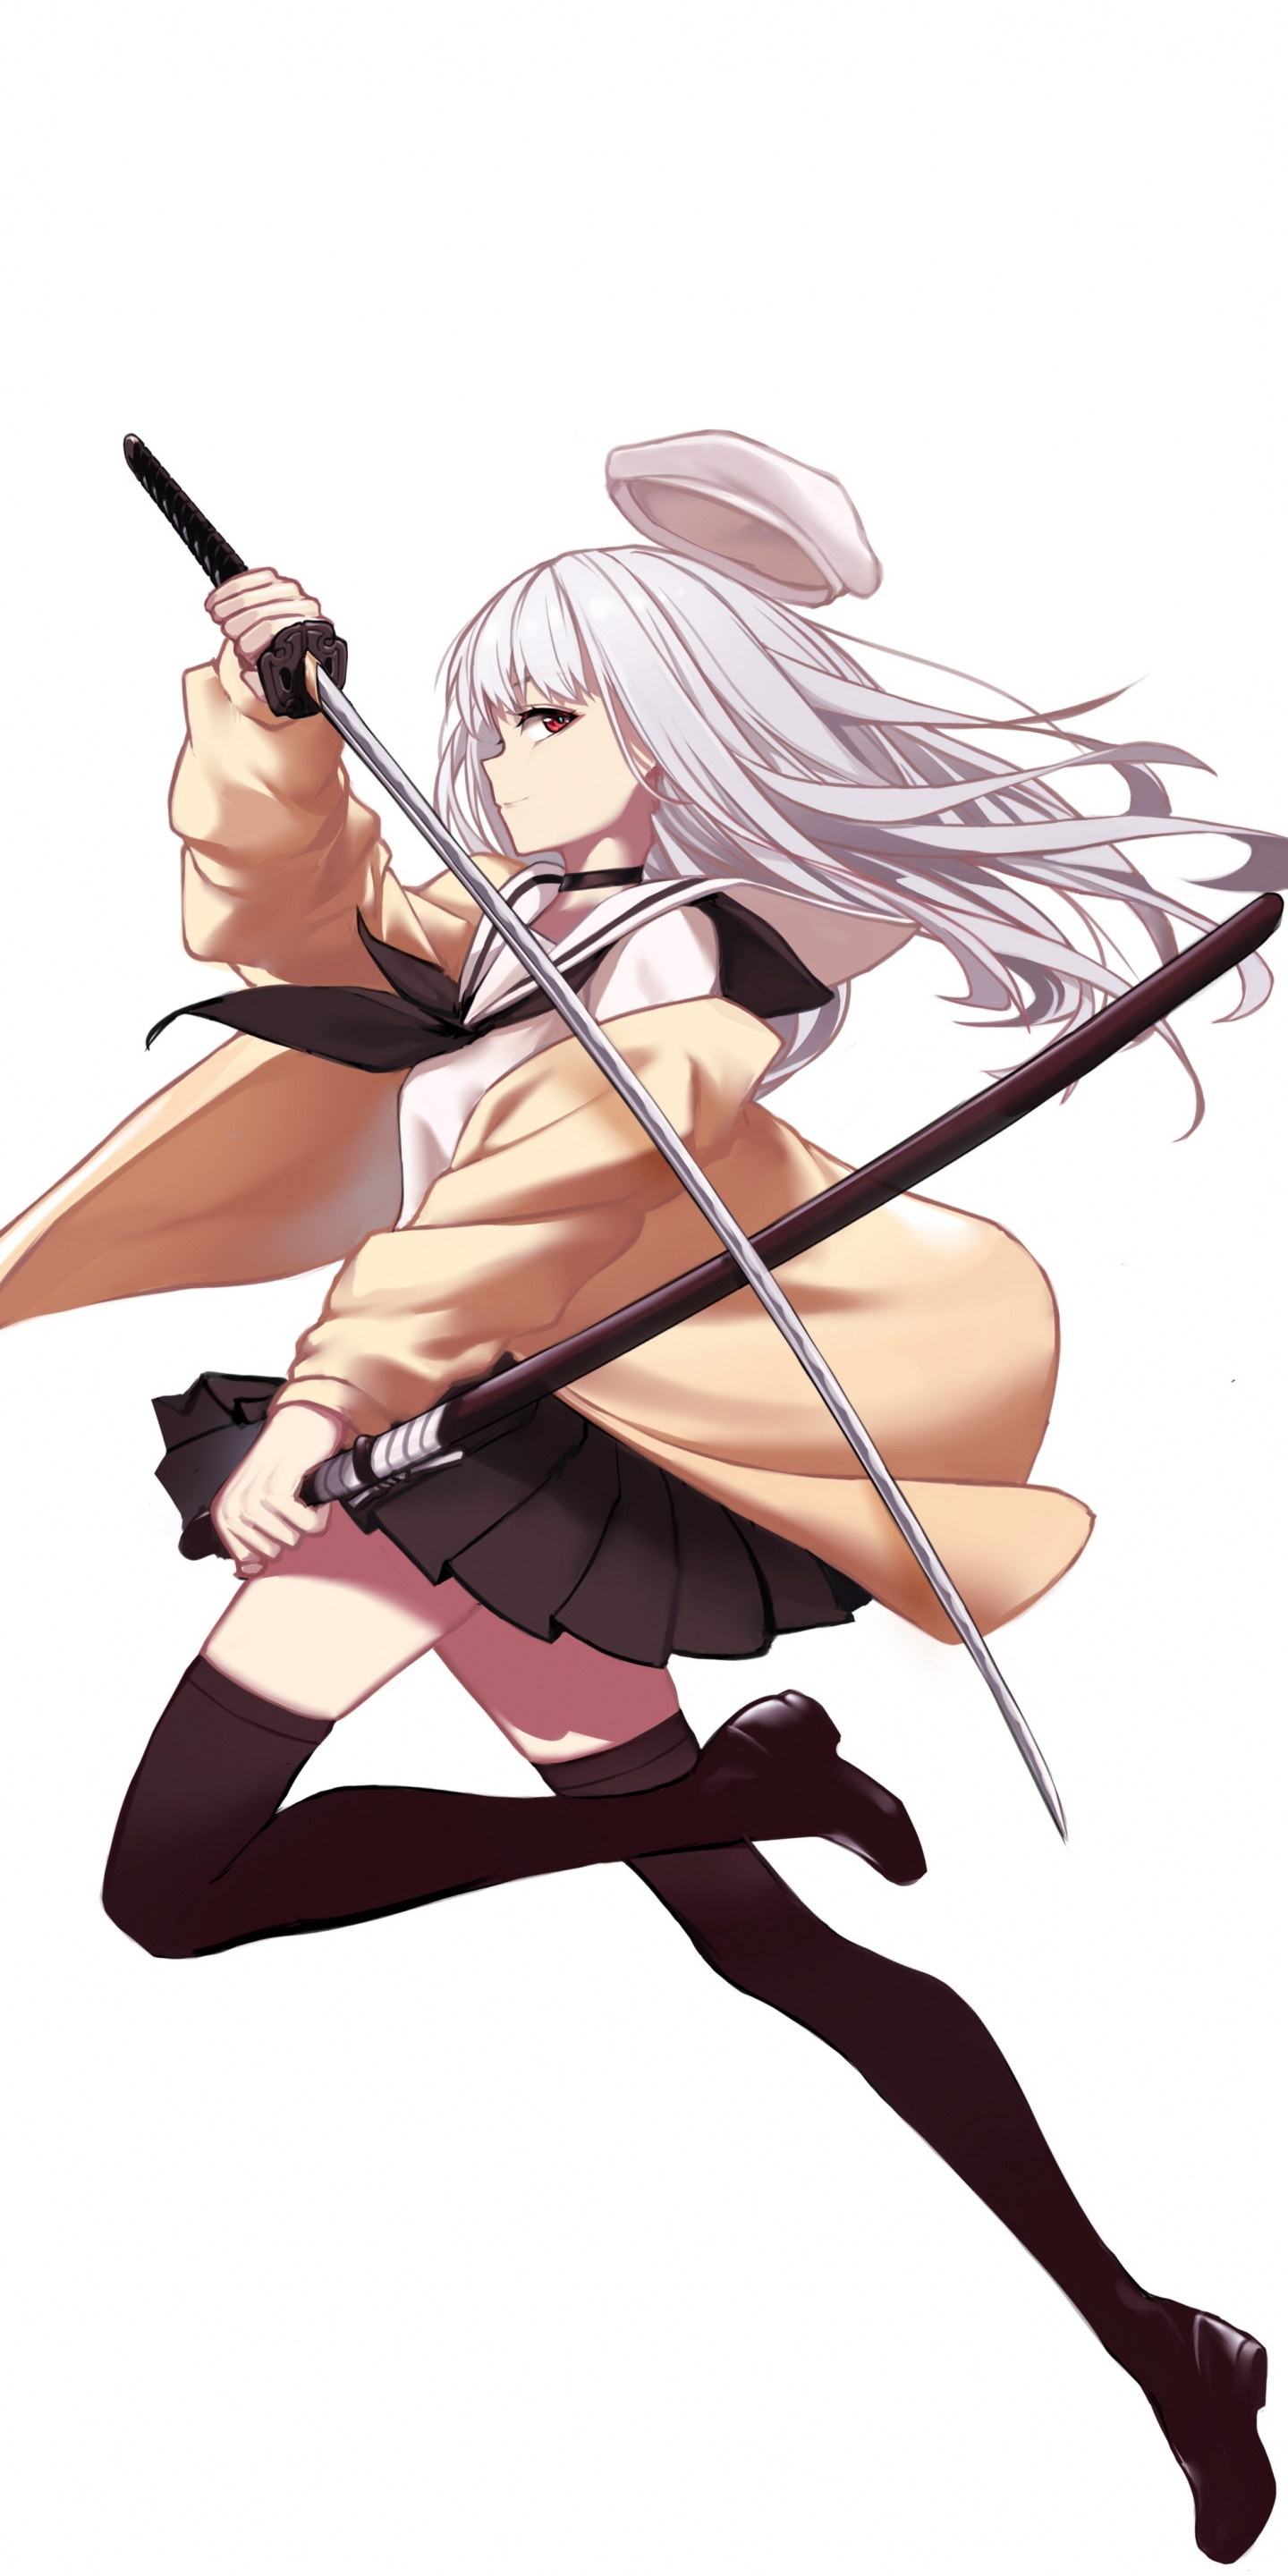 Download Wallpaper 1440x2880 Anime Girl And Her Katana Warrior Original Lg V30 Lg G6 0906